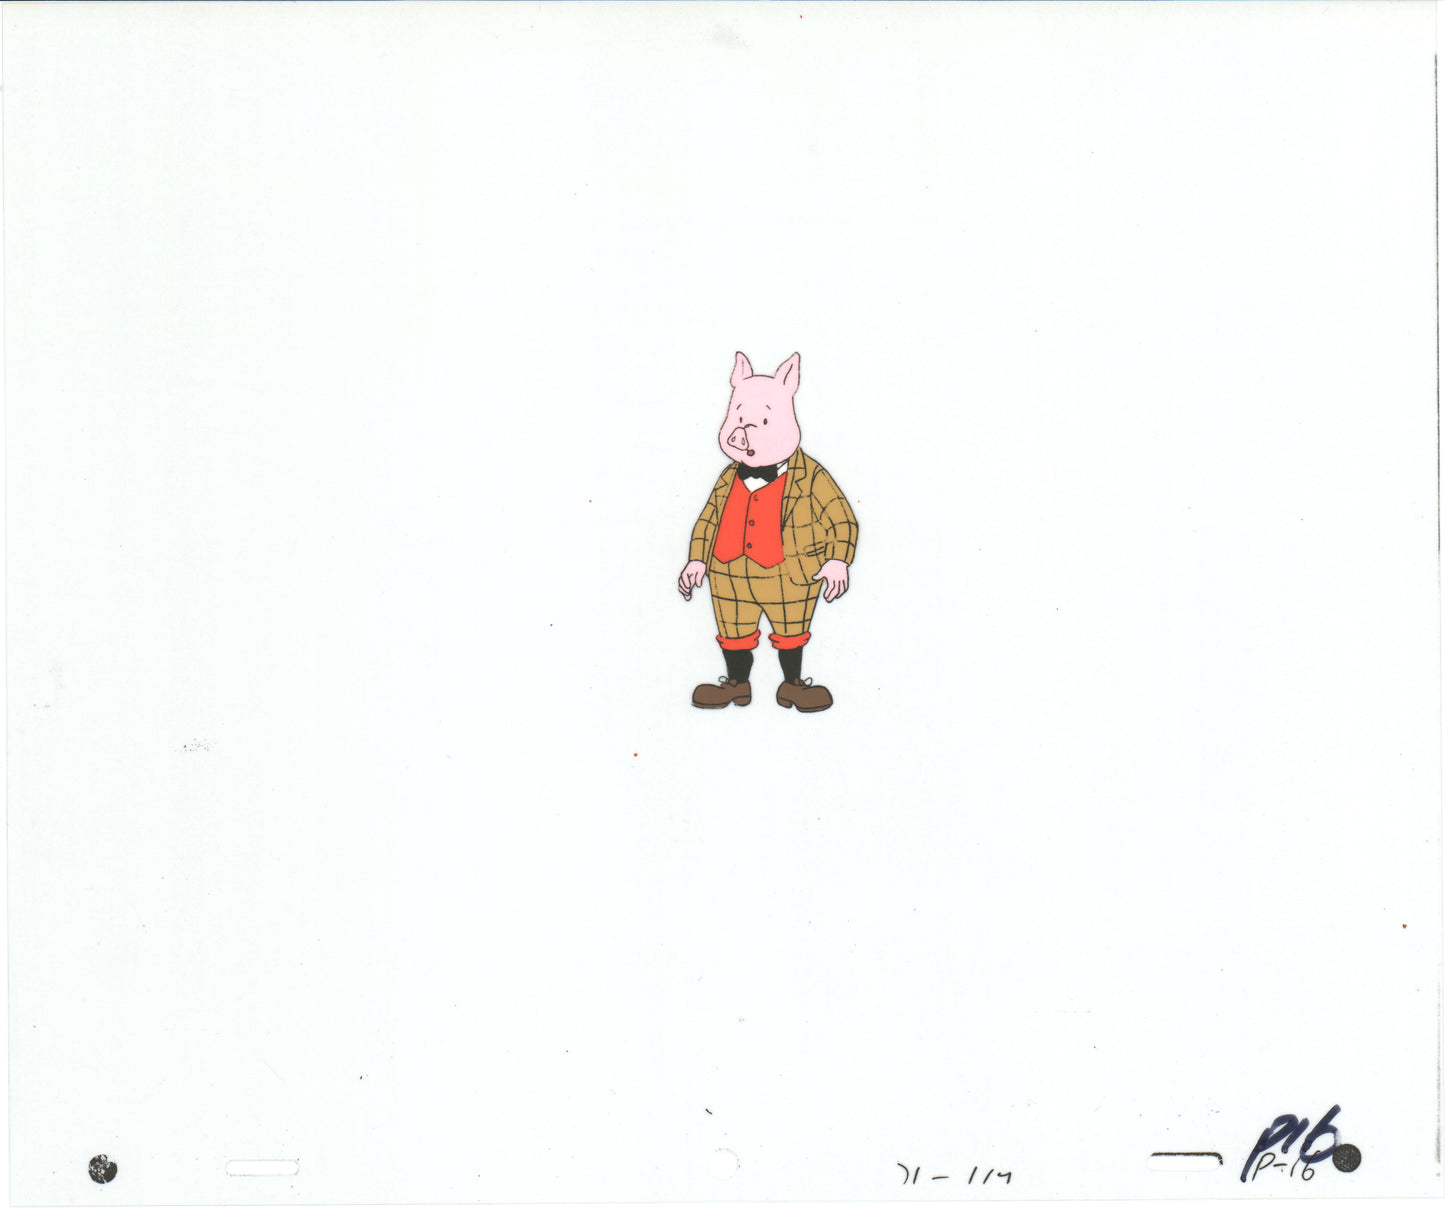 RUPERT Bear Podgy Pig Original Production Animation Cel from the Cartoon by Nelvana Tourtel Animation 1990s 8-330